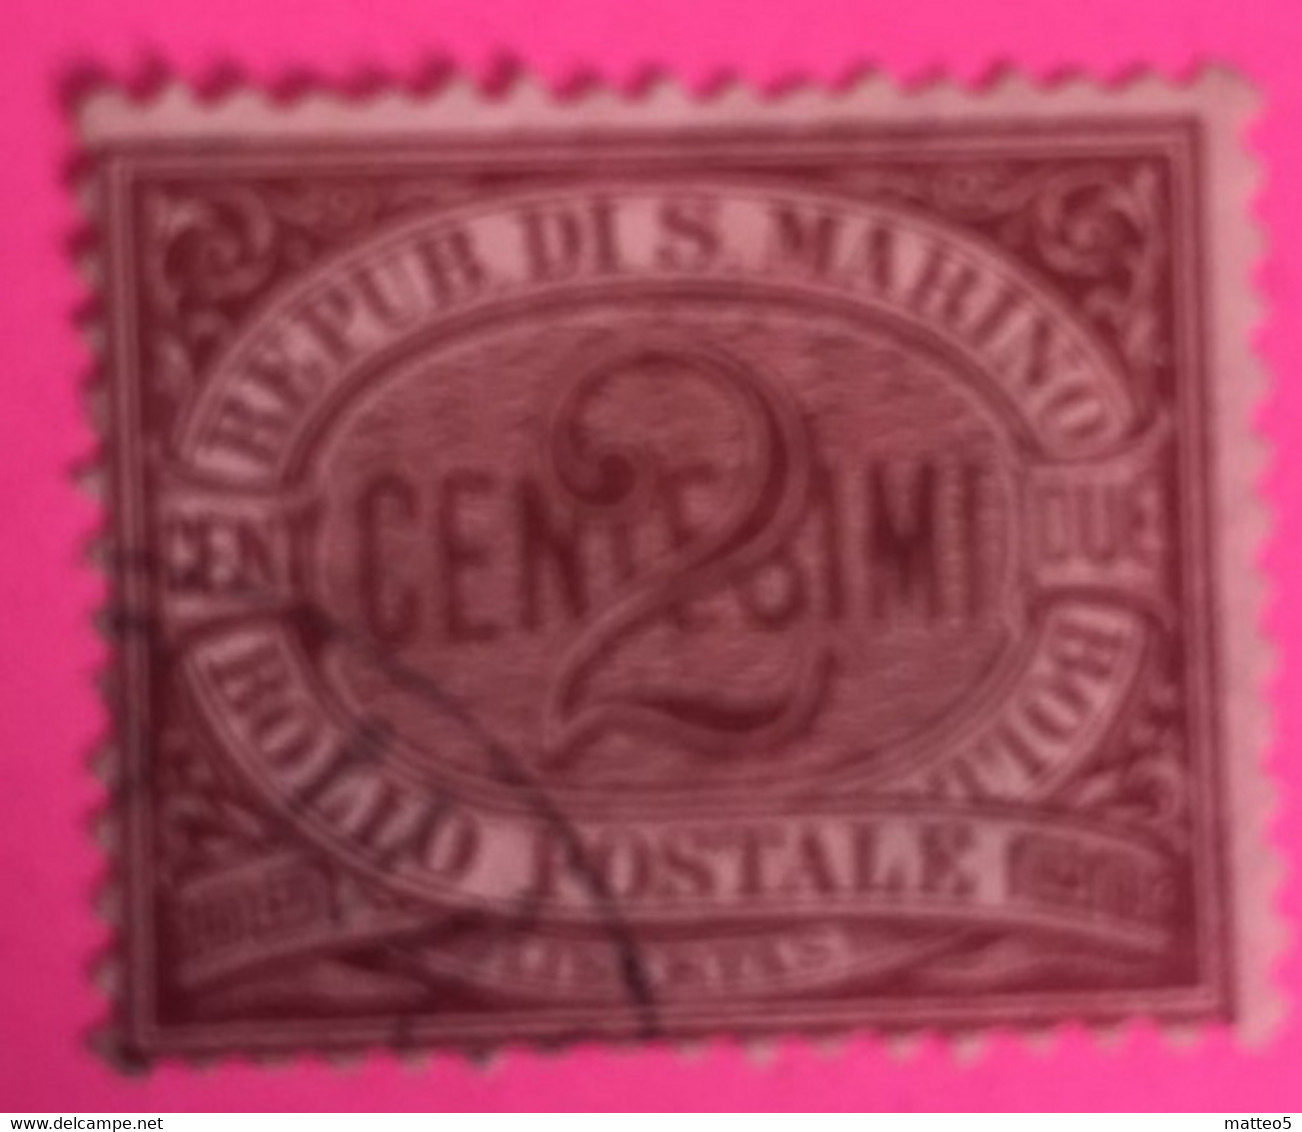 1894/99 - San Marino - 2  Cent  - Usato - - Usados